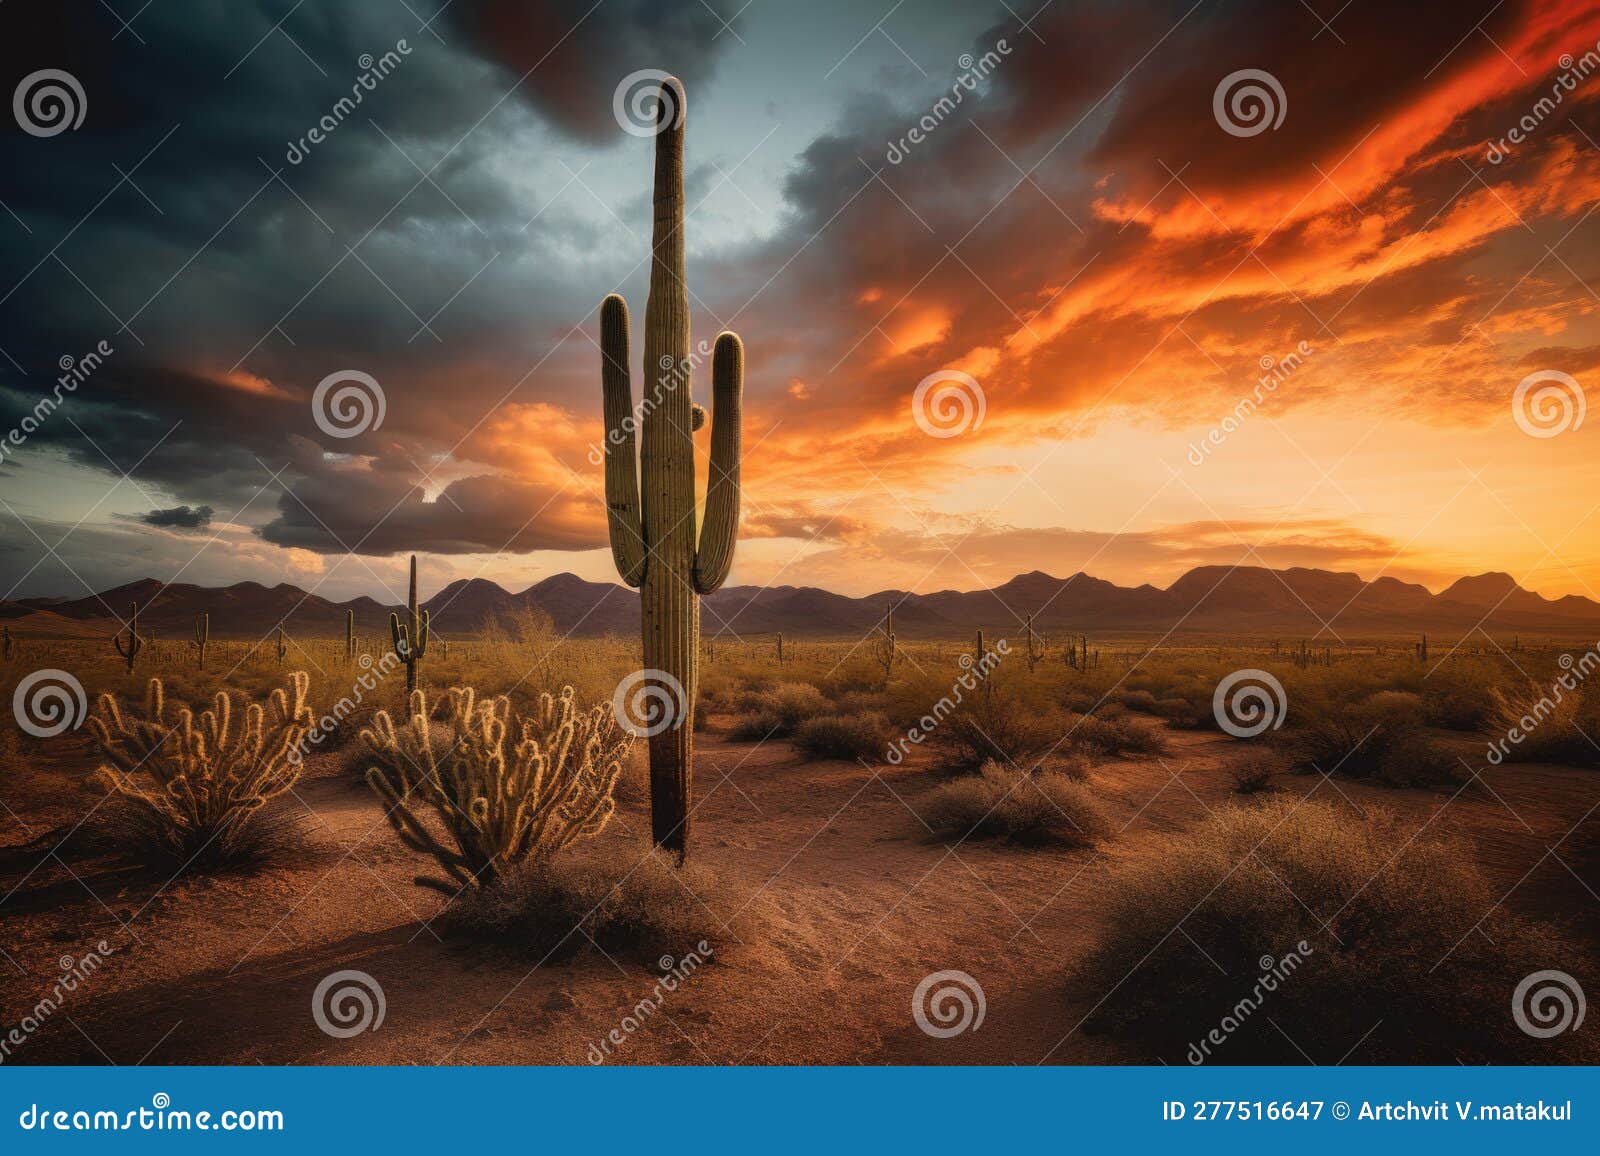 Arizona Desert Landscape at Sunset with Saguaro Cactus Stock ...